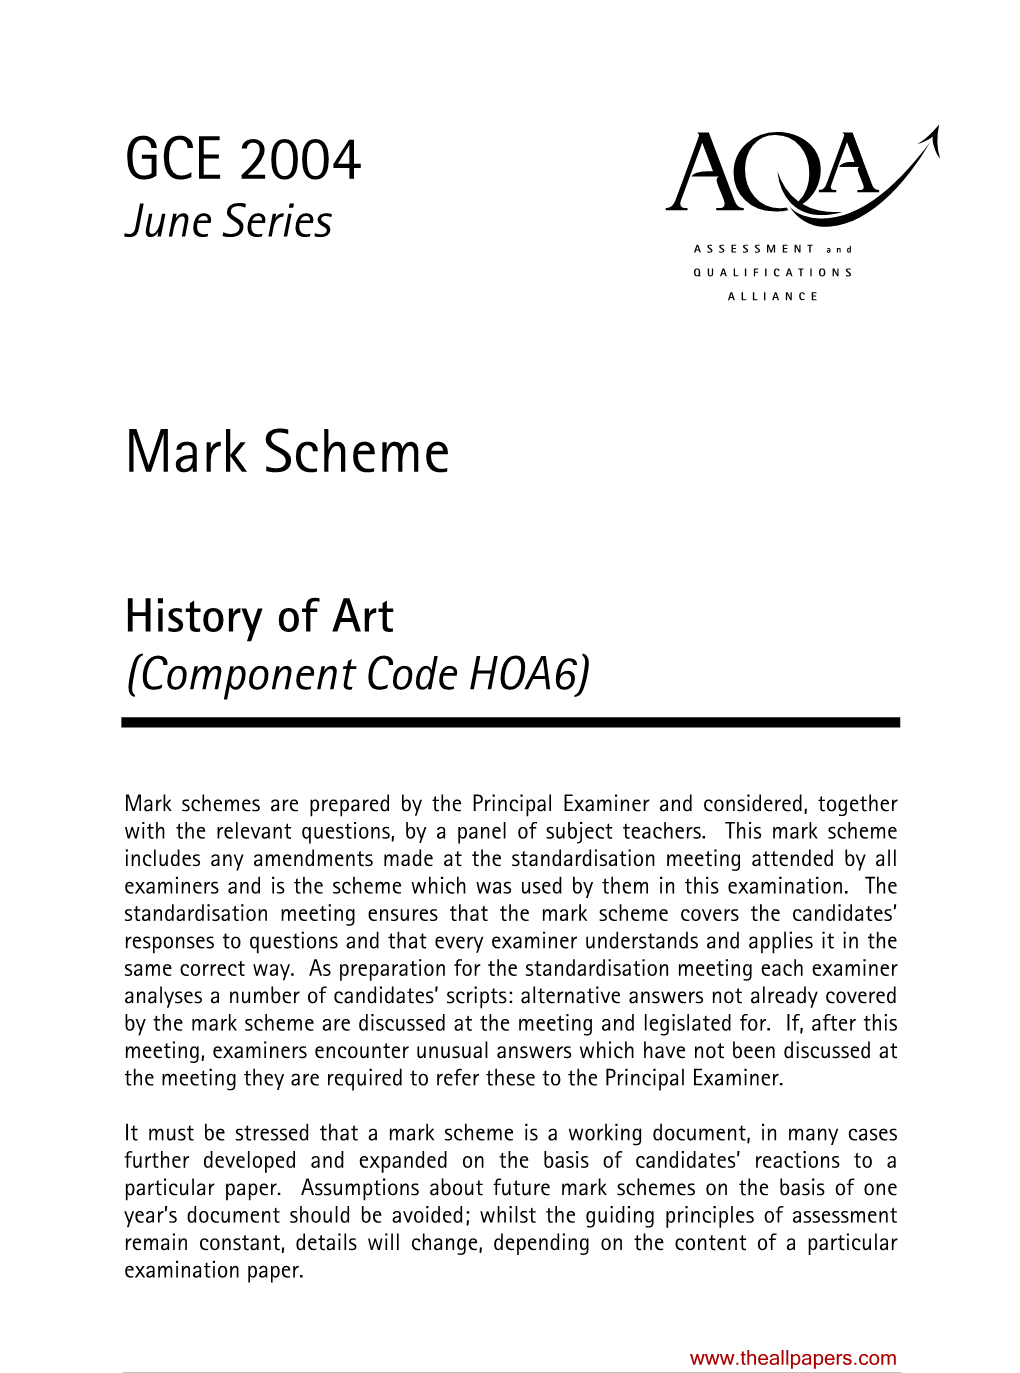 AQA GCE Mark Scheme June 2004